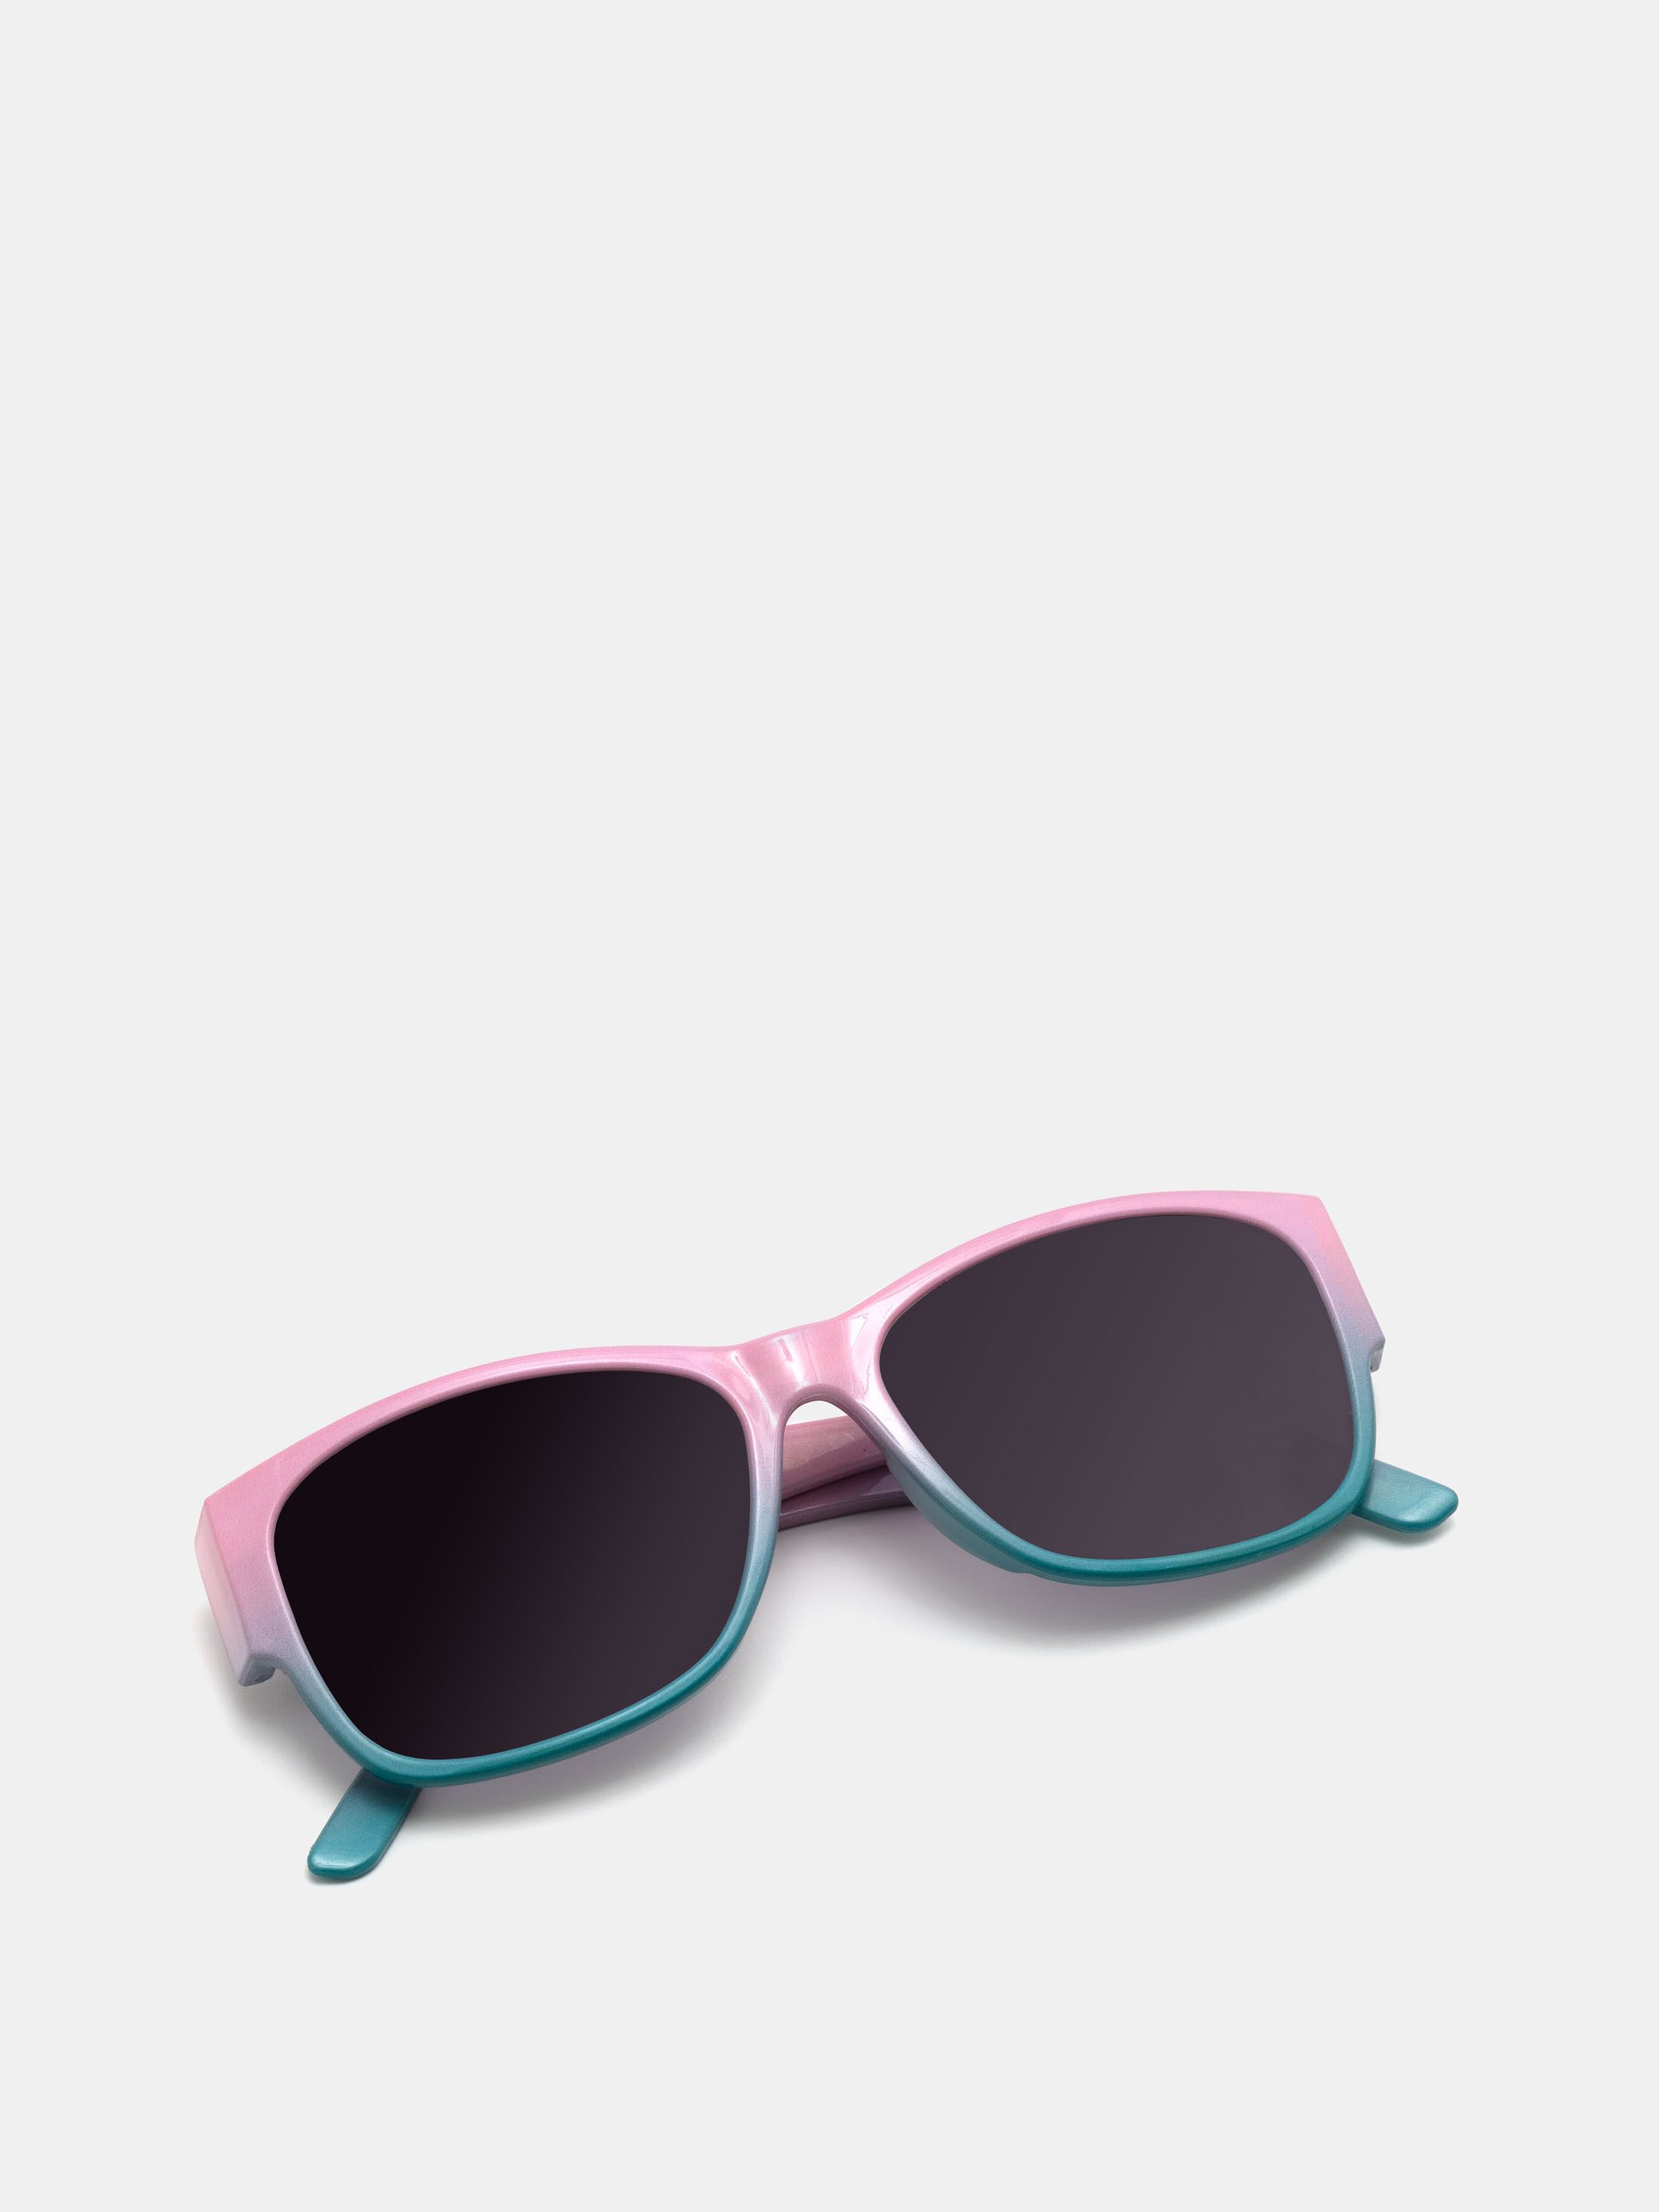 funky sunglasses detail